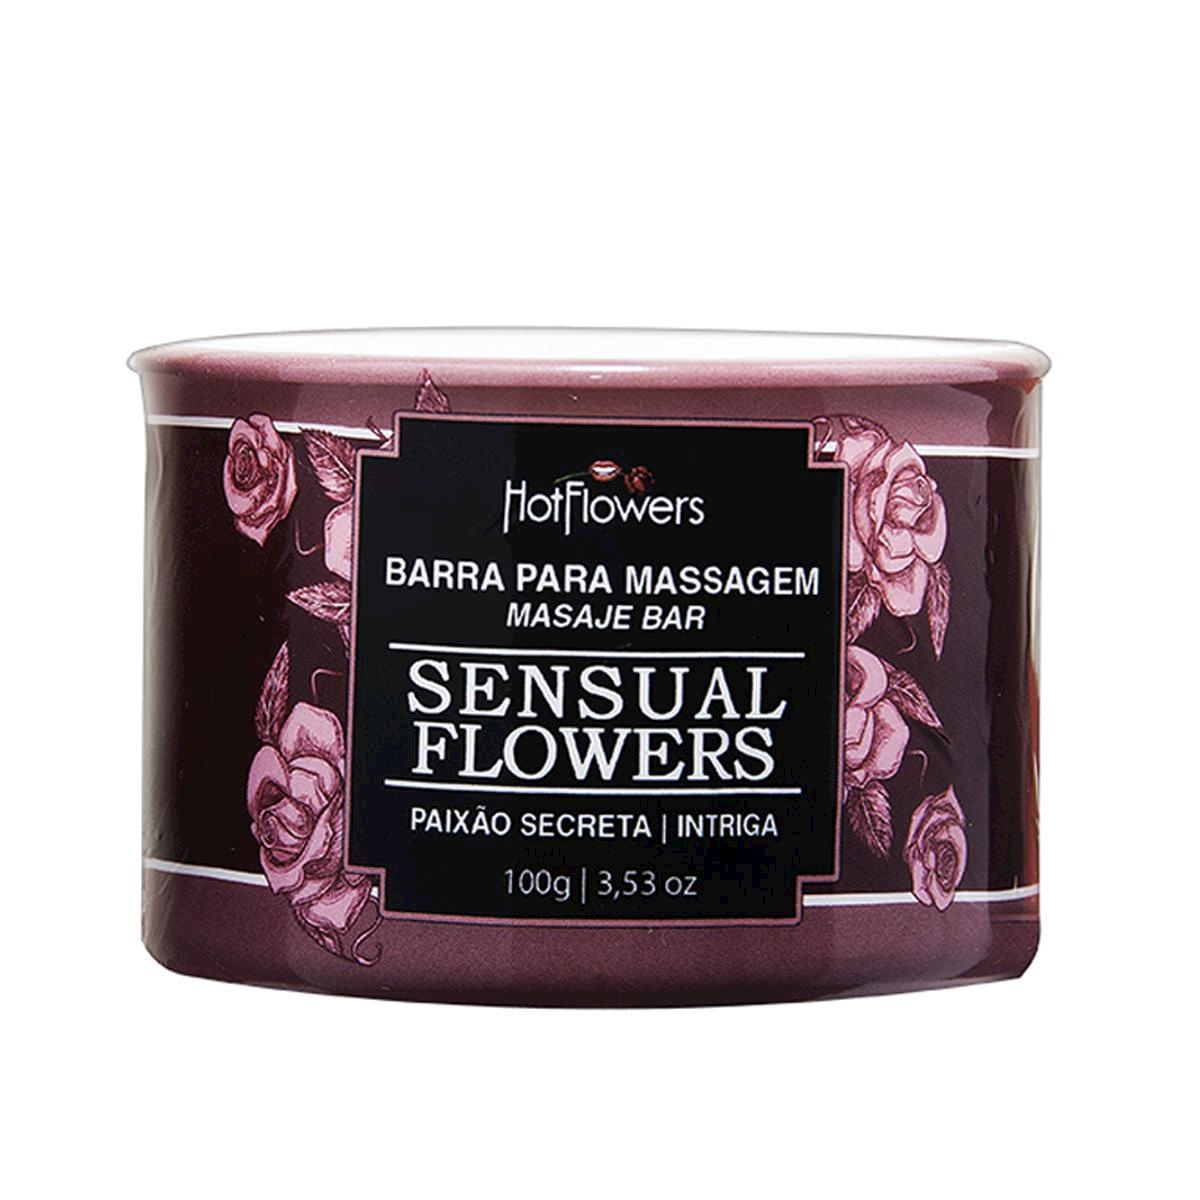 Barra para Massagem Sensual 100g Hot Flowers